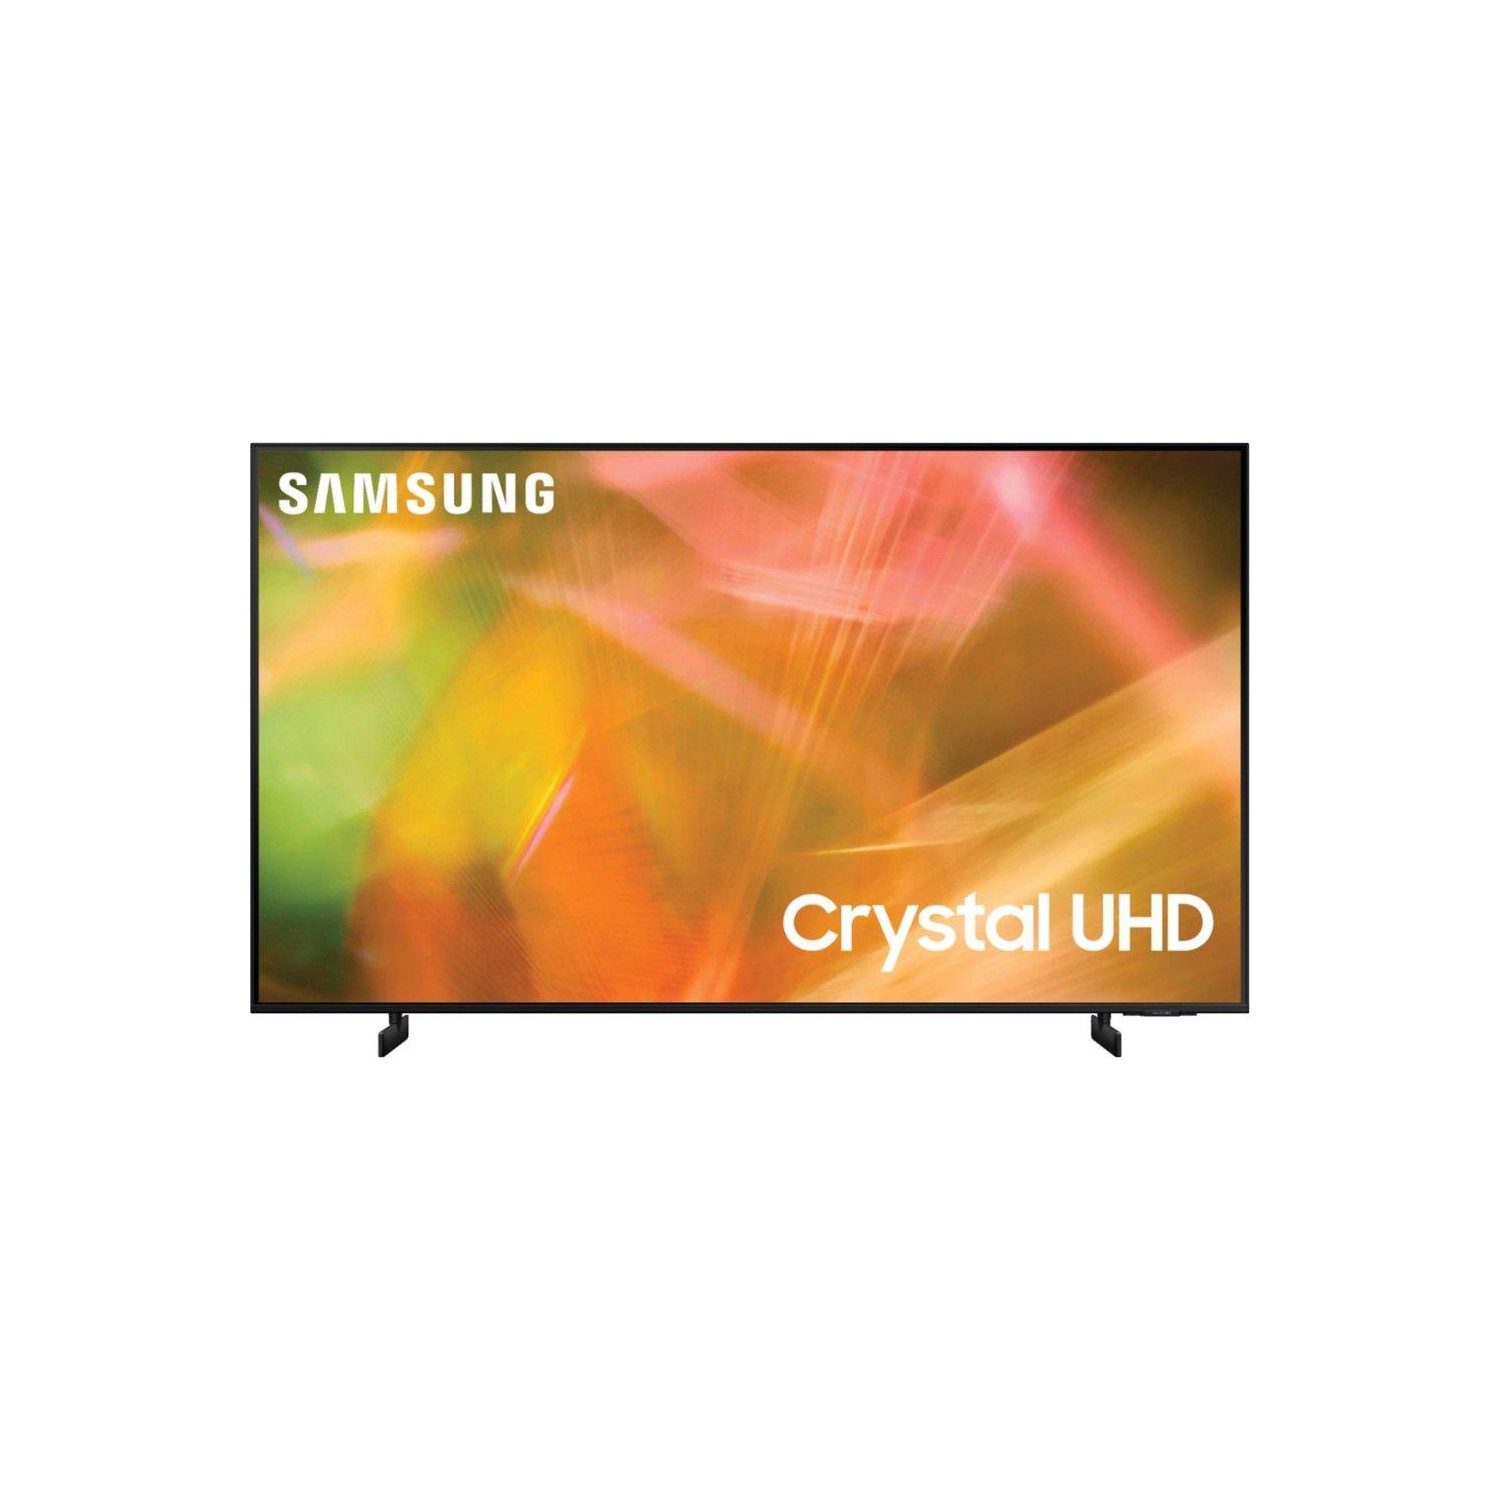 Refurbished (Good) - Samsung 55" Class 4K Crystal UHD (2160p) LED Smart TV with HDR (UN55AU8000)